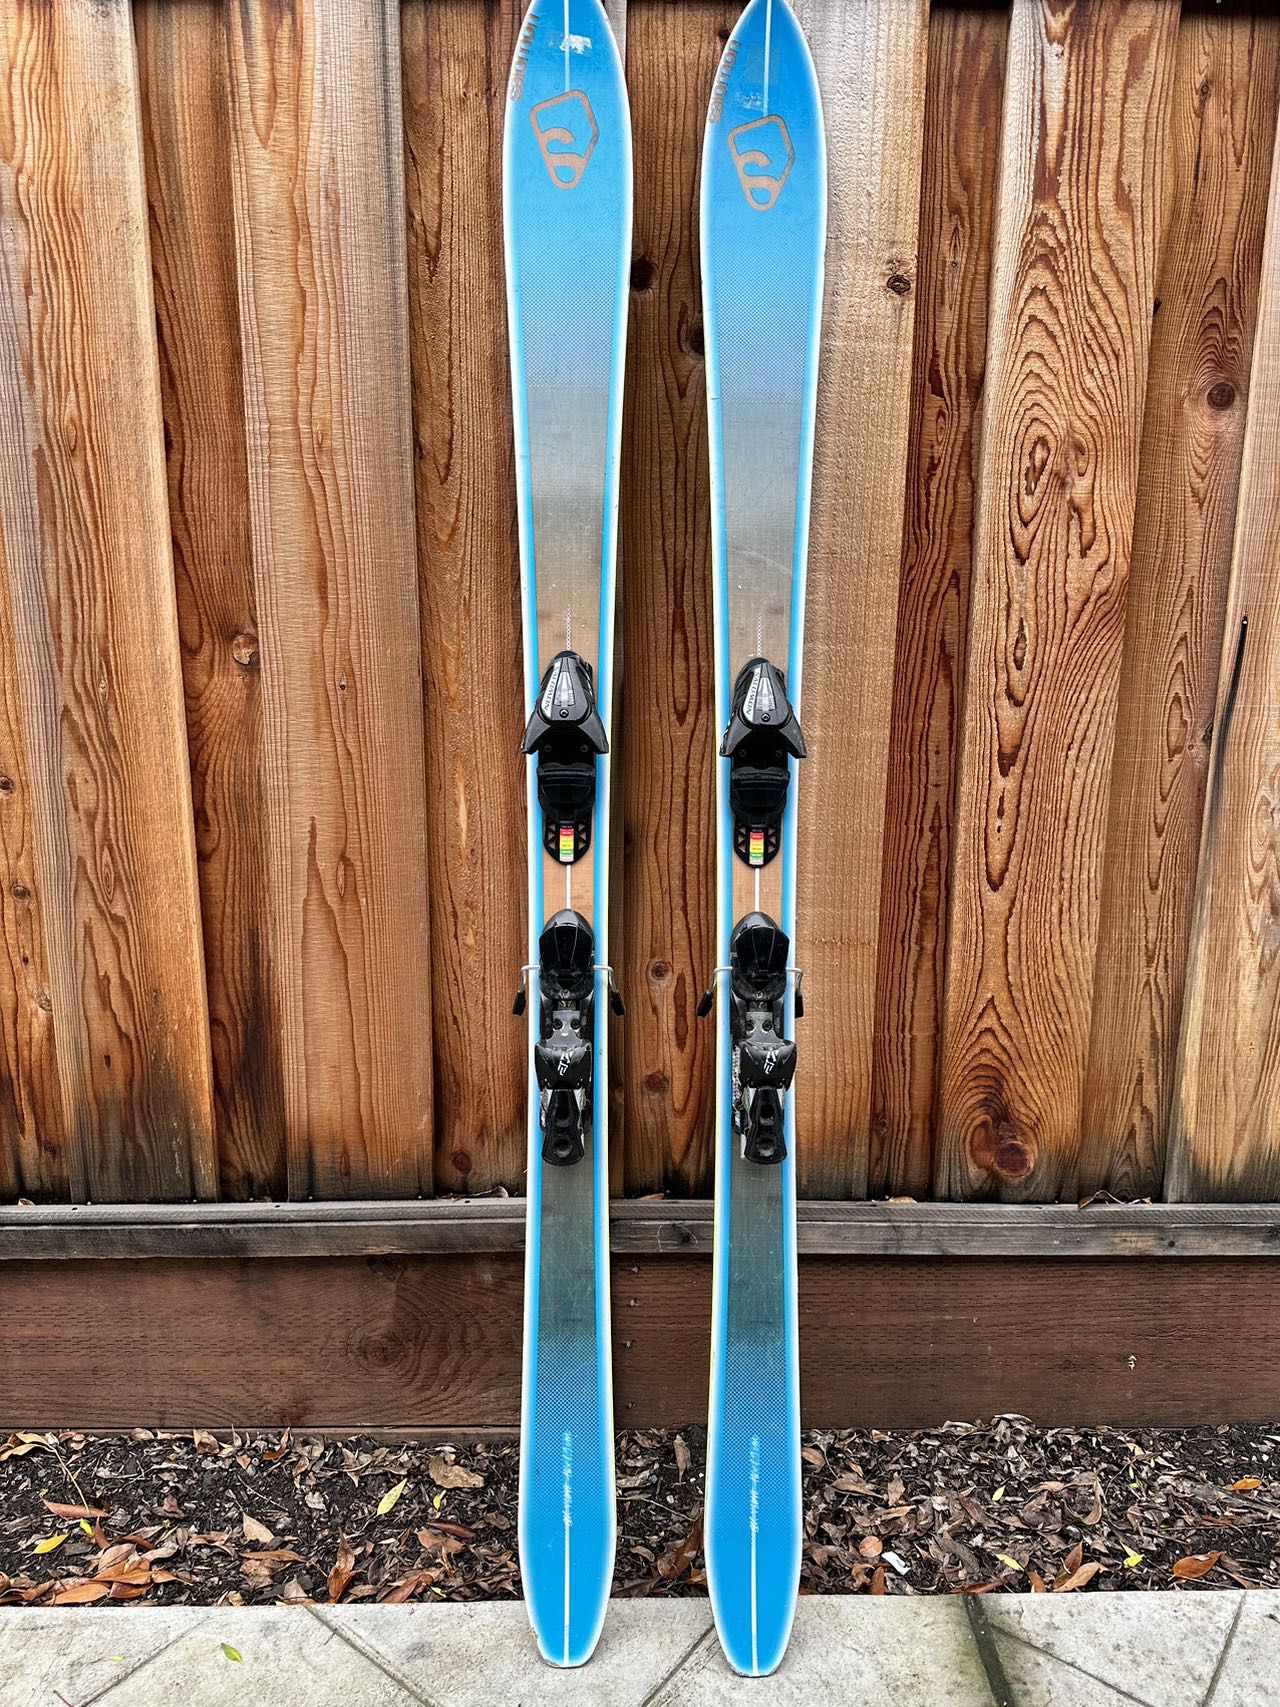 Salomon BBR 8.9 skis